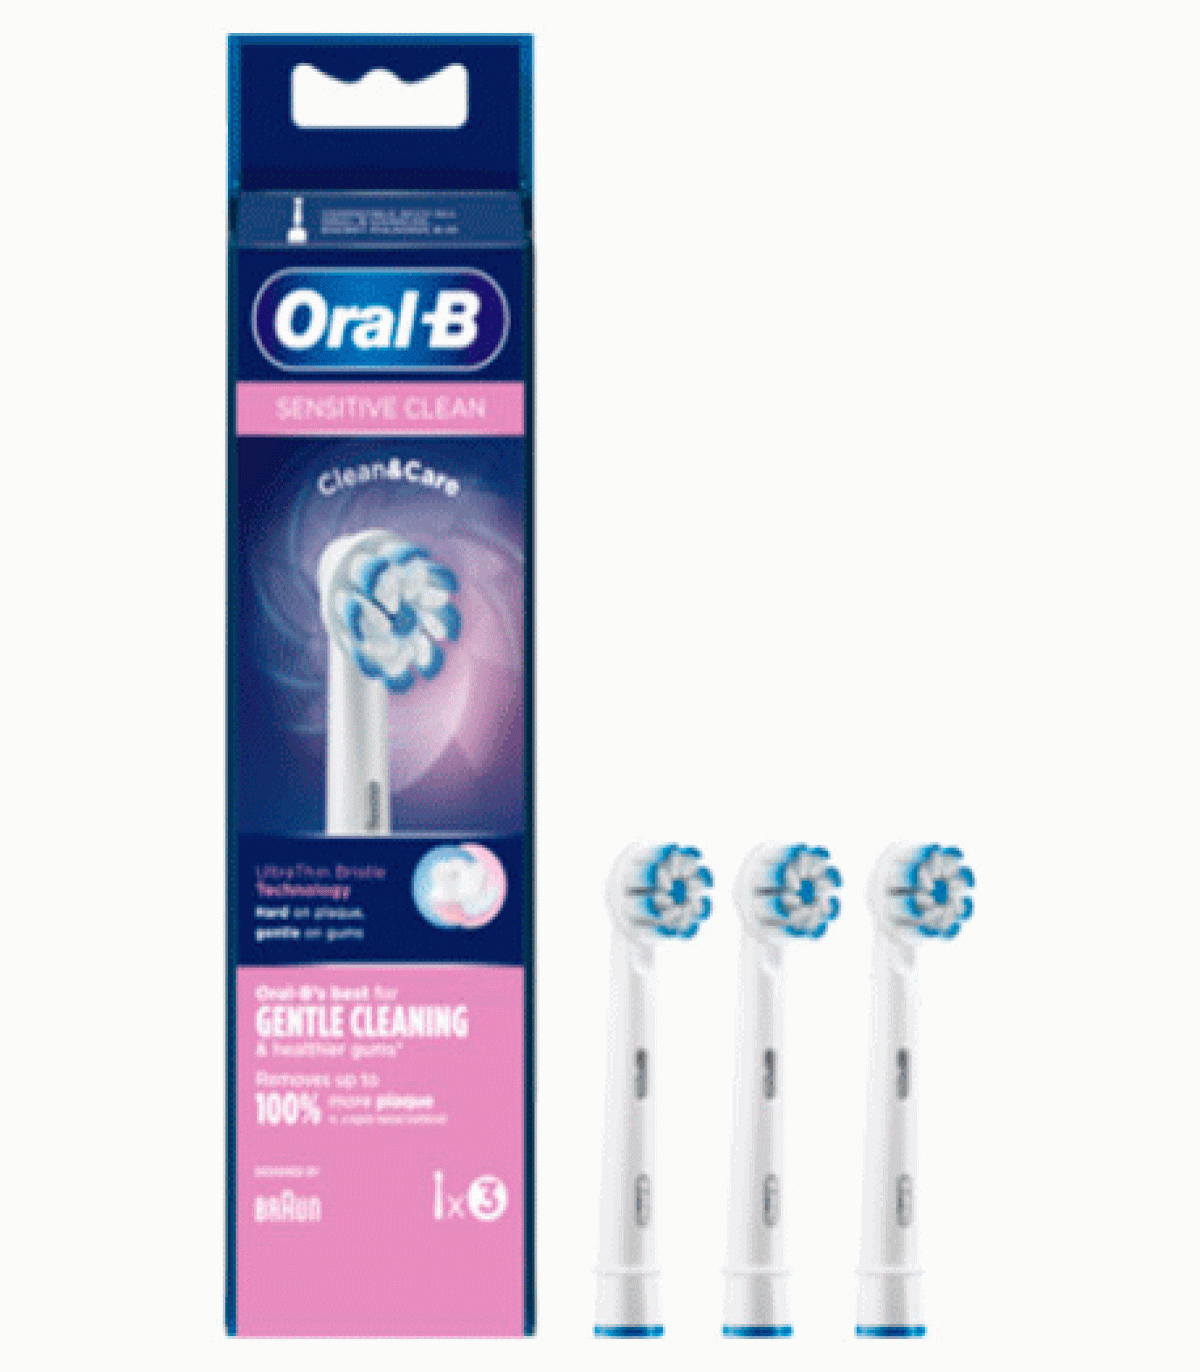 Oral B Sensitive Clean